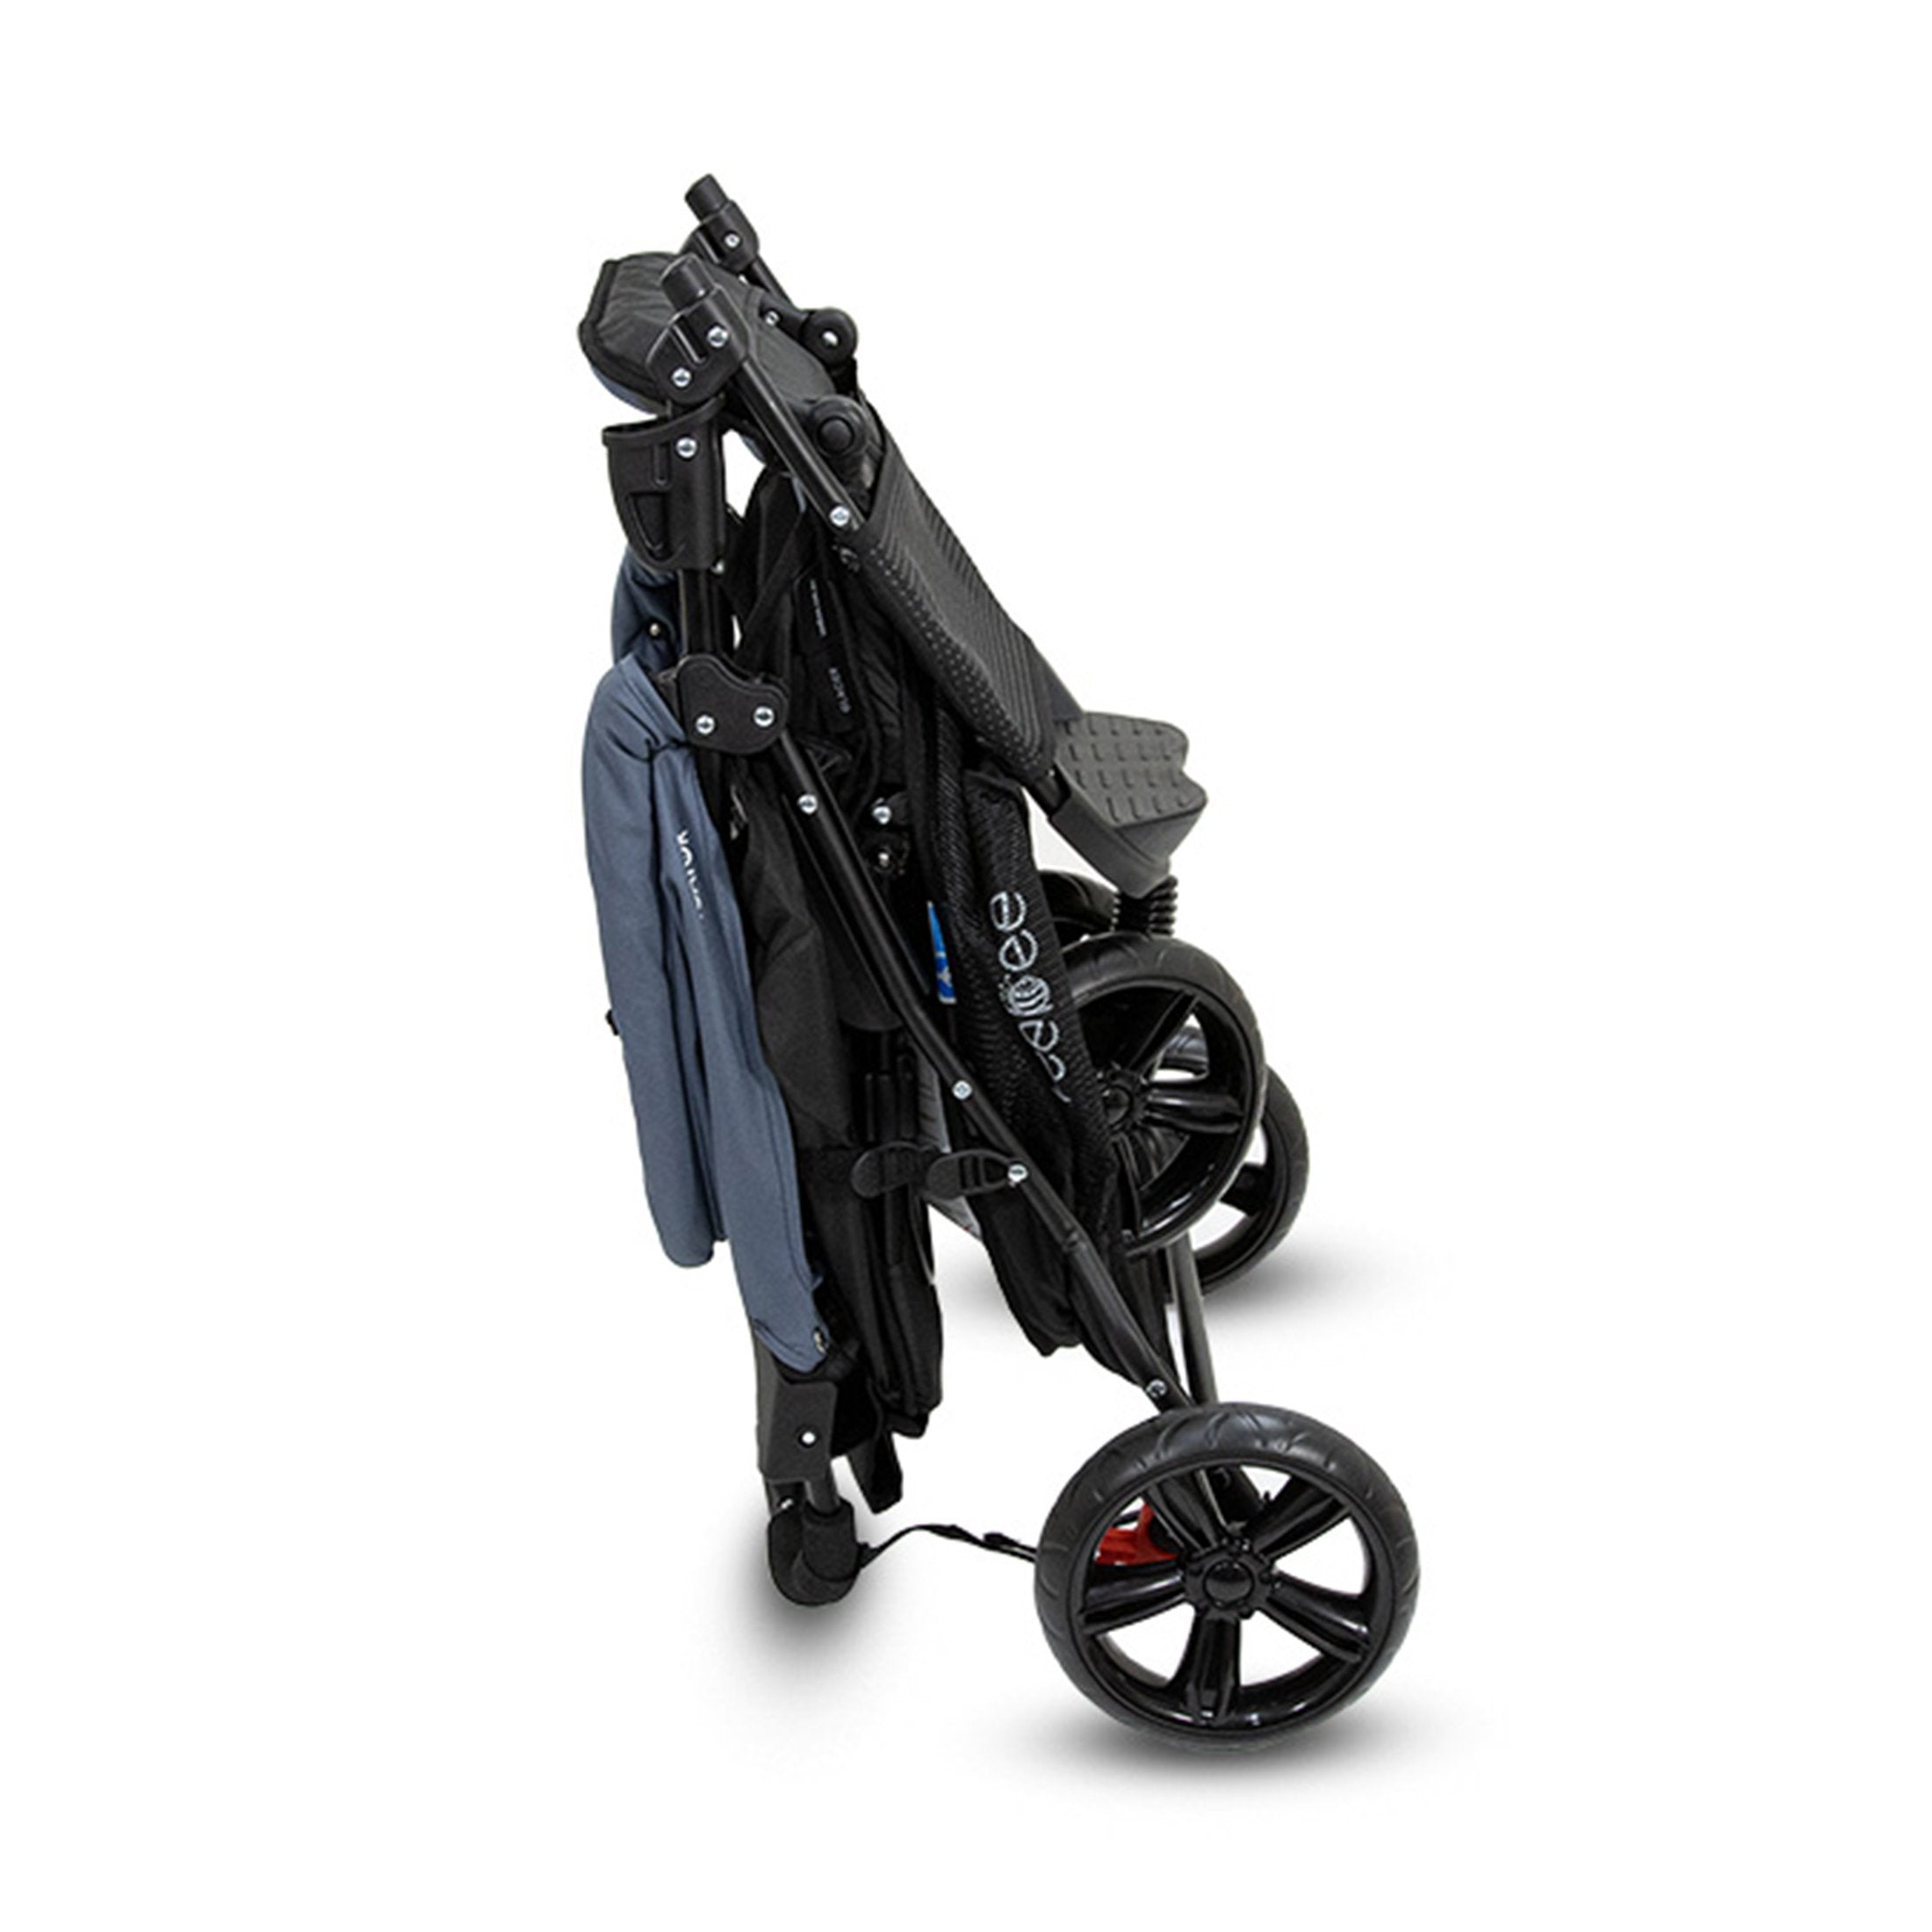 Veebee Navigator Stroller 3-wheel Pram For Newborns To Toddlers - Glacier